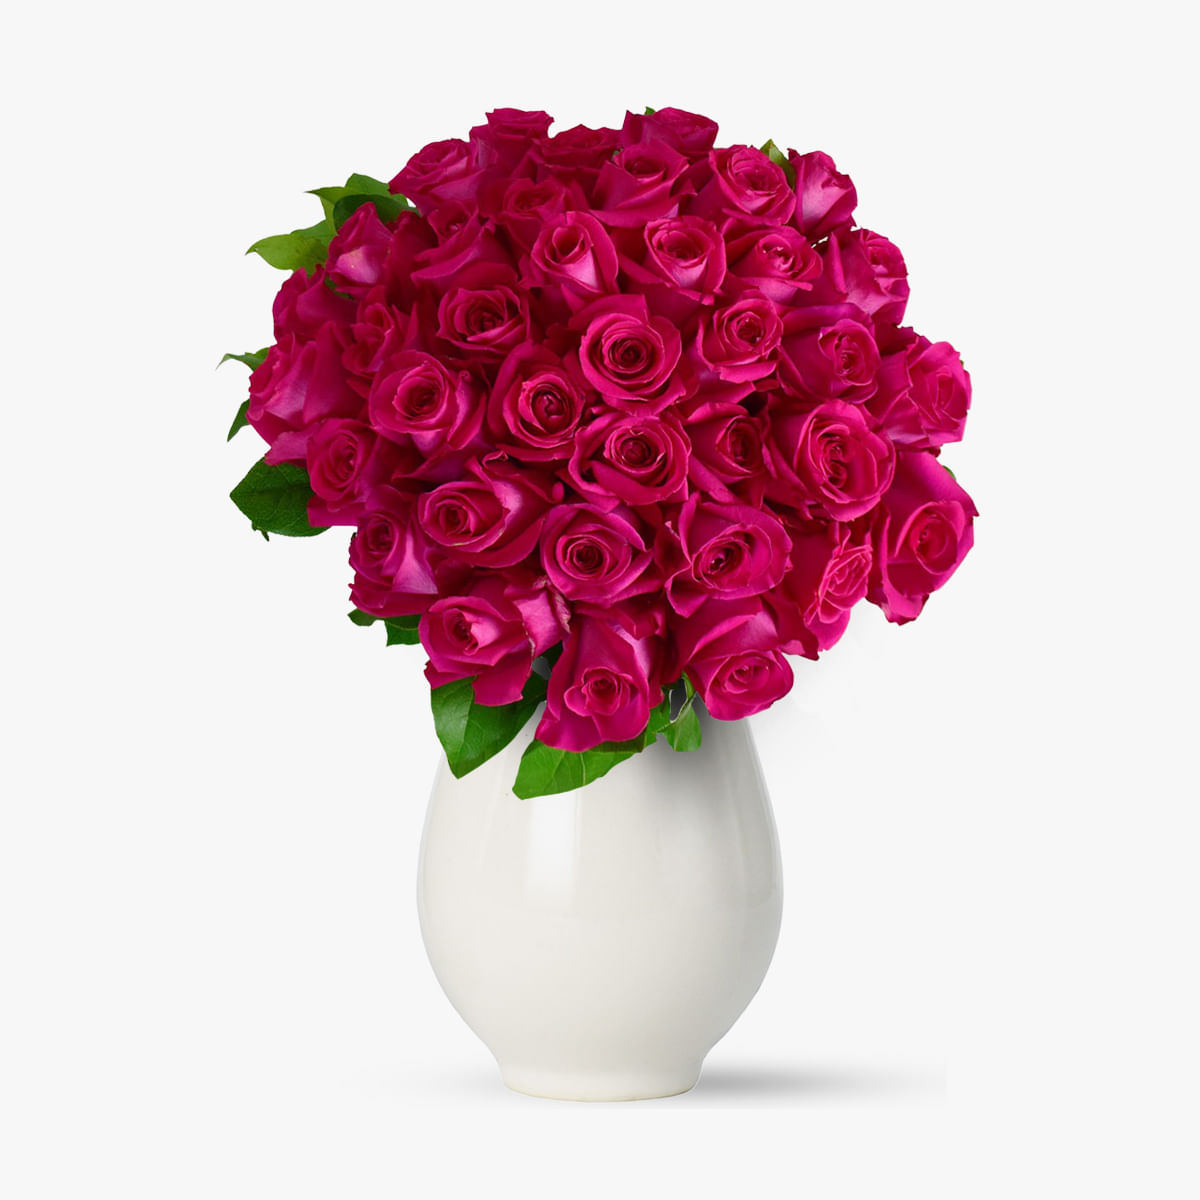 Buchet de 51 trandafiri roz – Standard Buchet